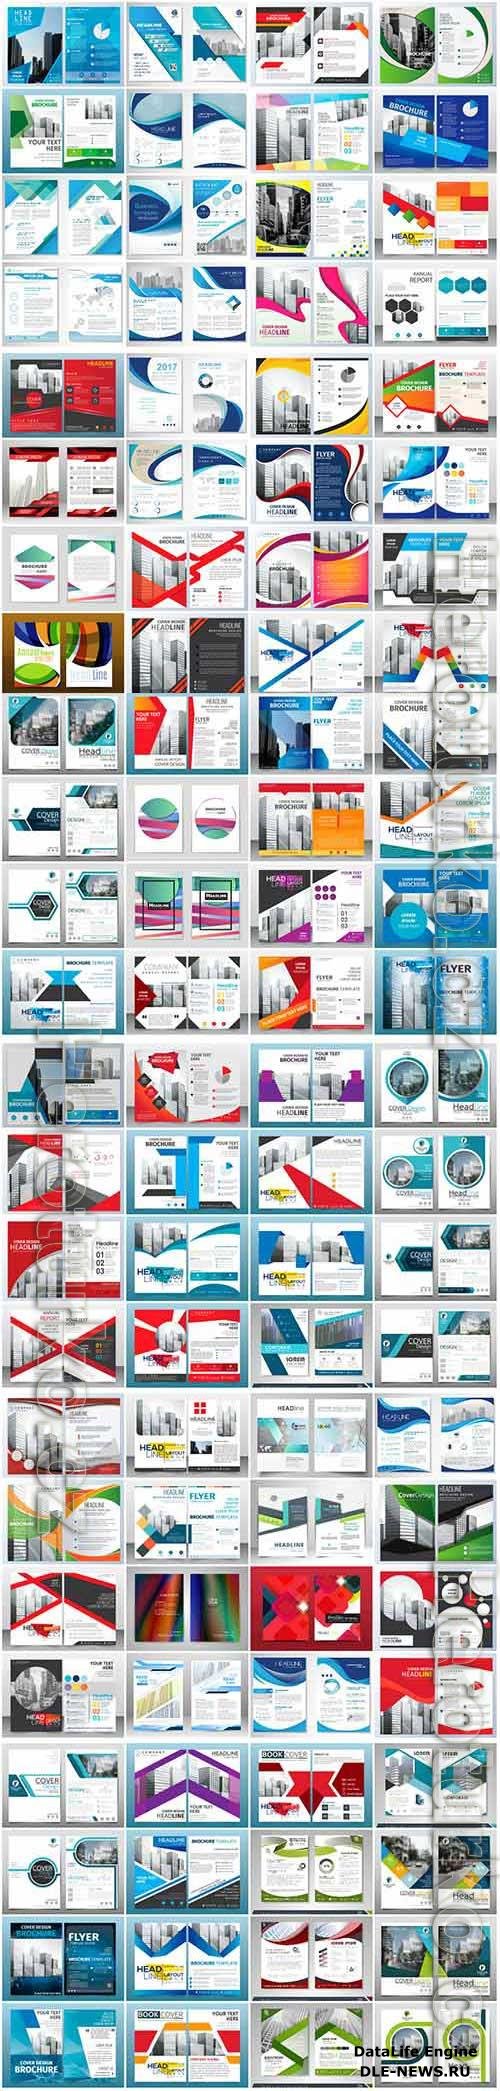 100 Bundle business brochures and flyers in vector vol 2